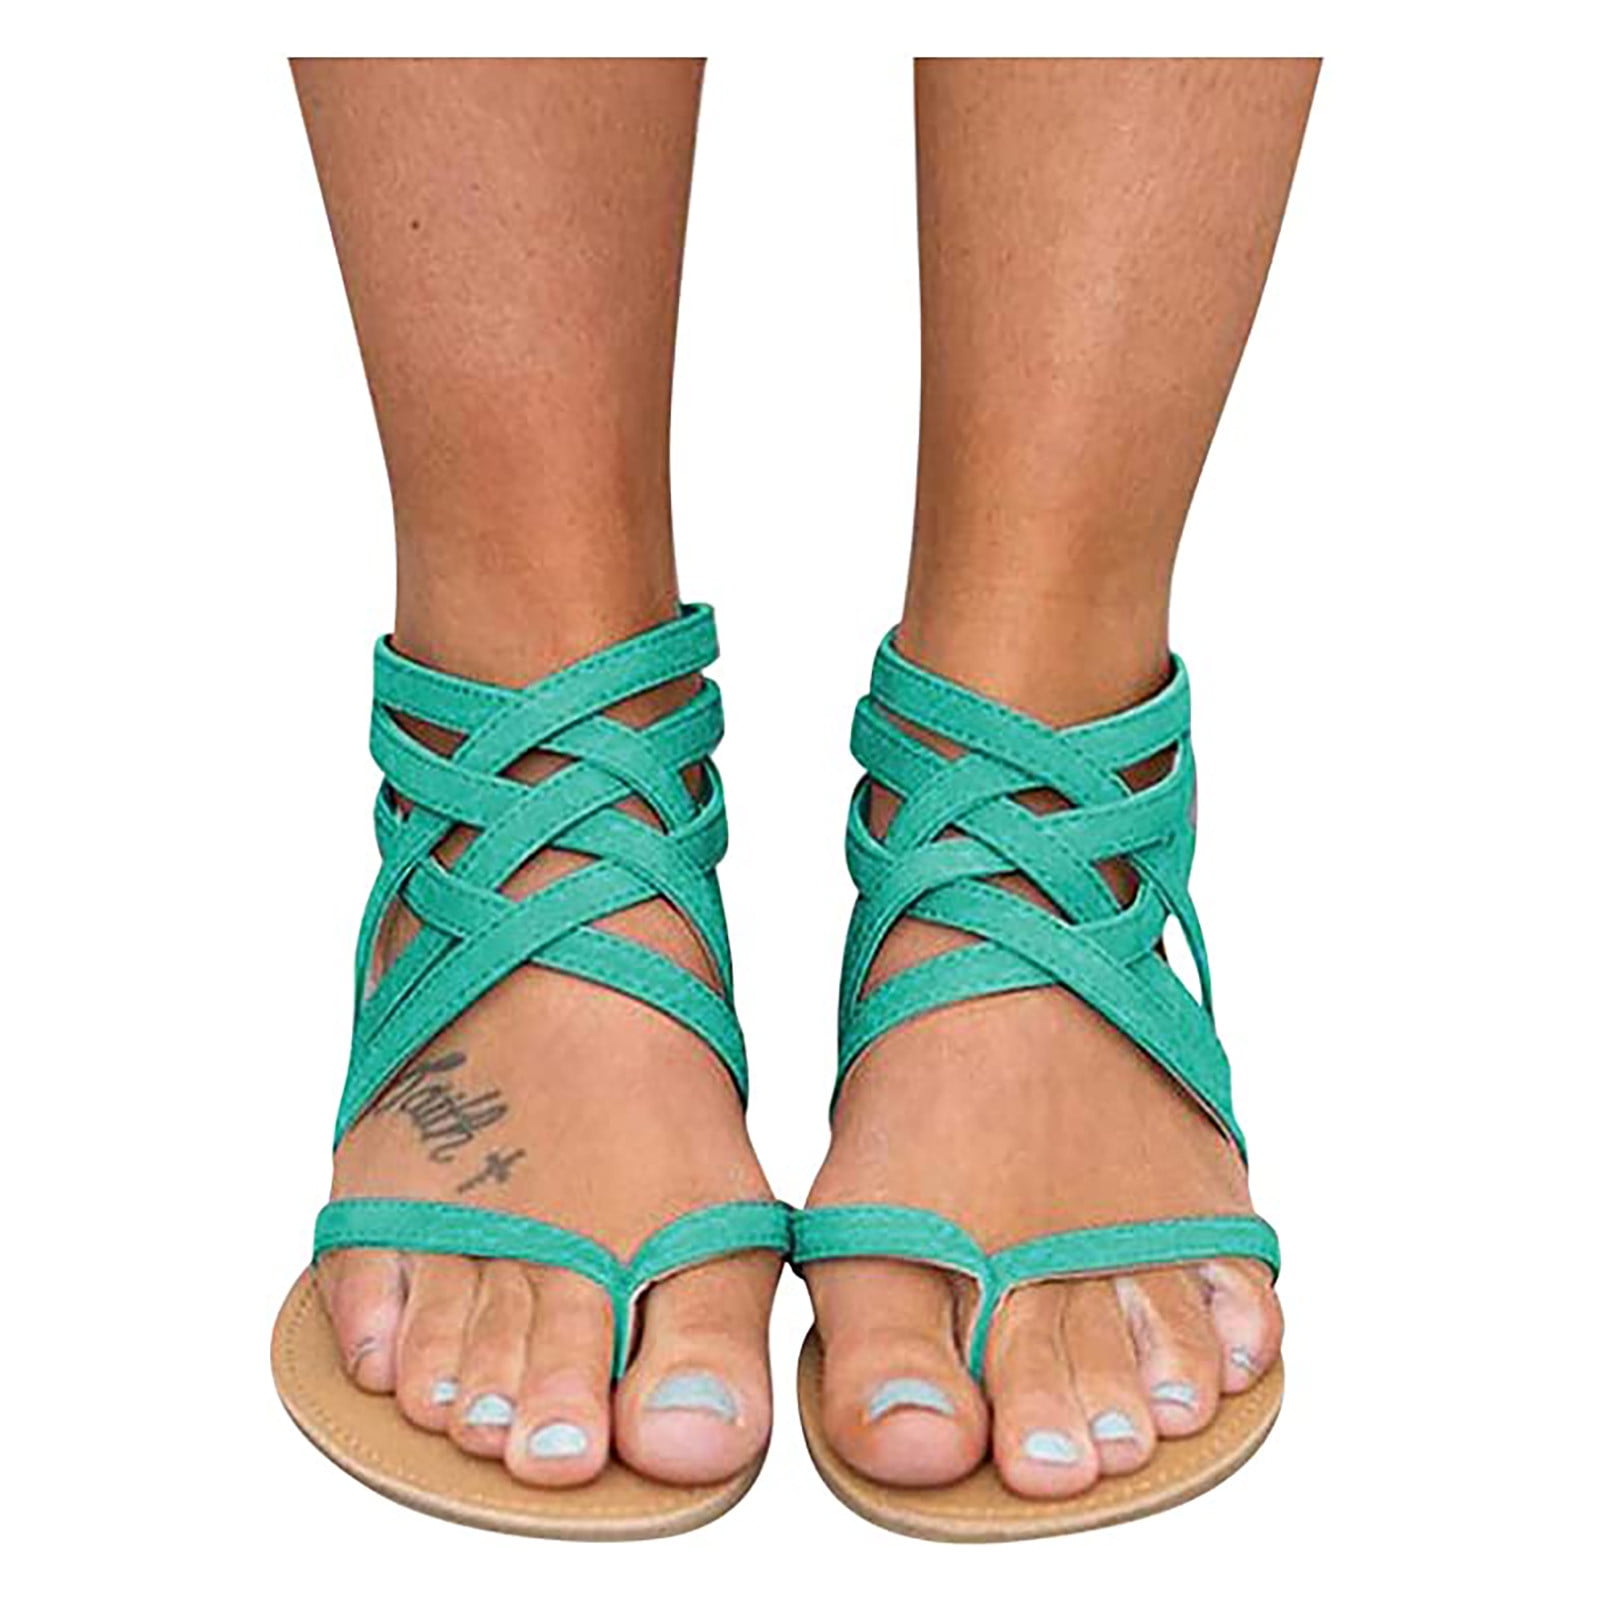 BEUU 2019 New Women Comfortable Flip Flop Roman Sandals Casual Zippers Shoes Beach Sandal